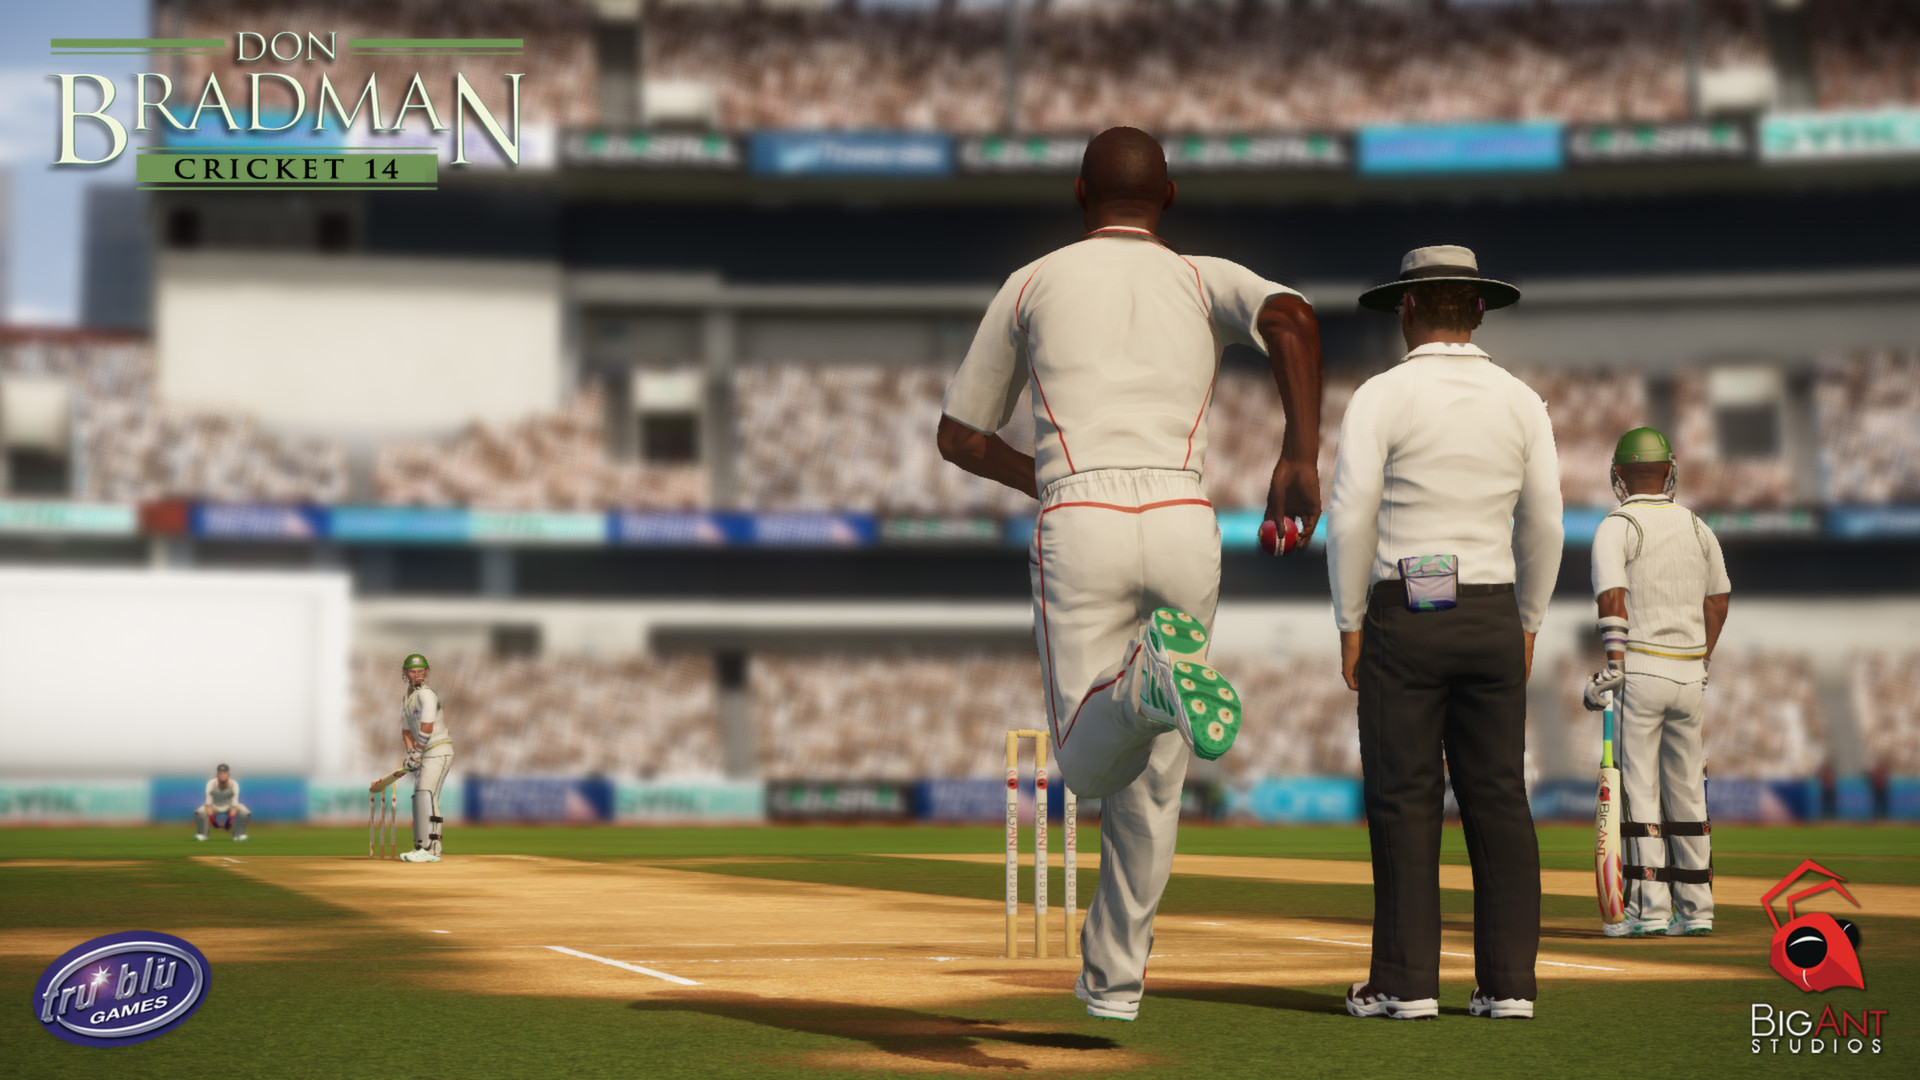 Don bradman cricket 2014 pc game download windows 7